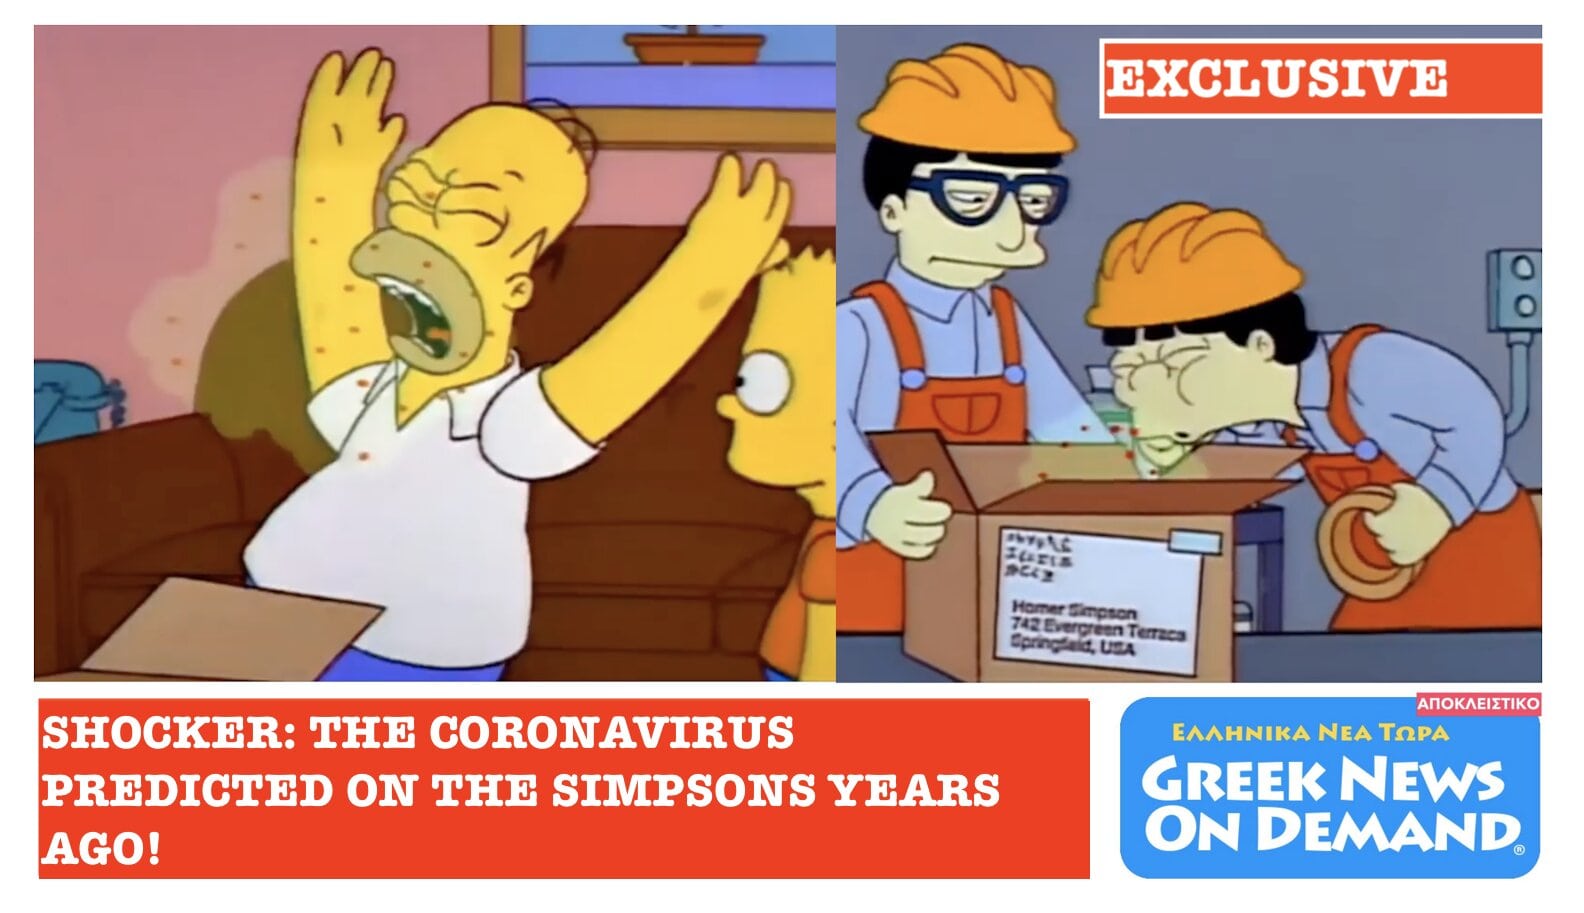 SHOCKER: THE #CORONAVIRUS PREDICTED ON THE SIMPSONS YEARS AGO!